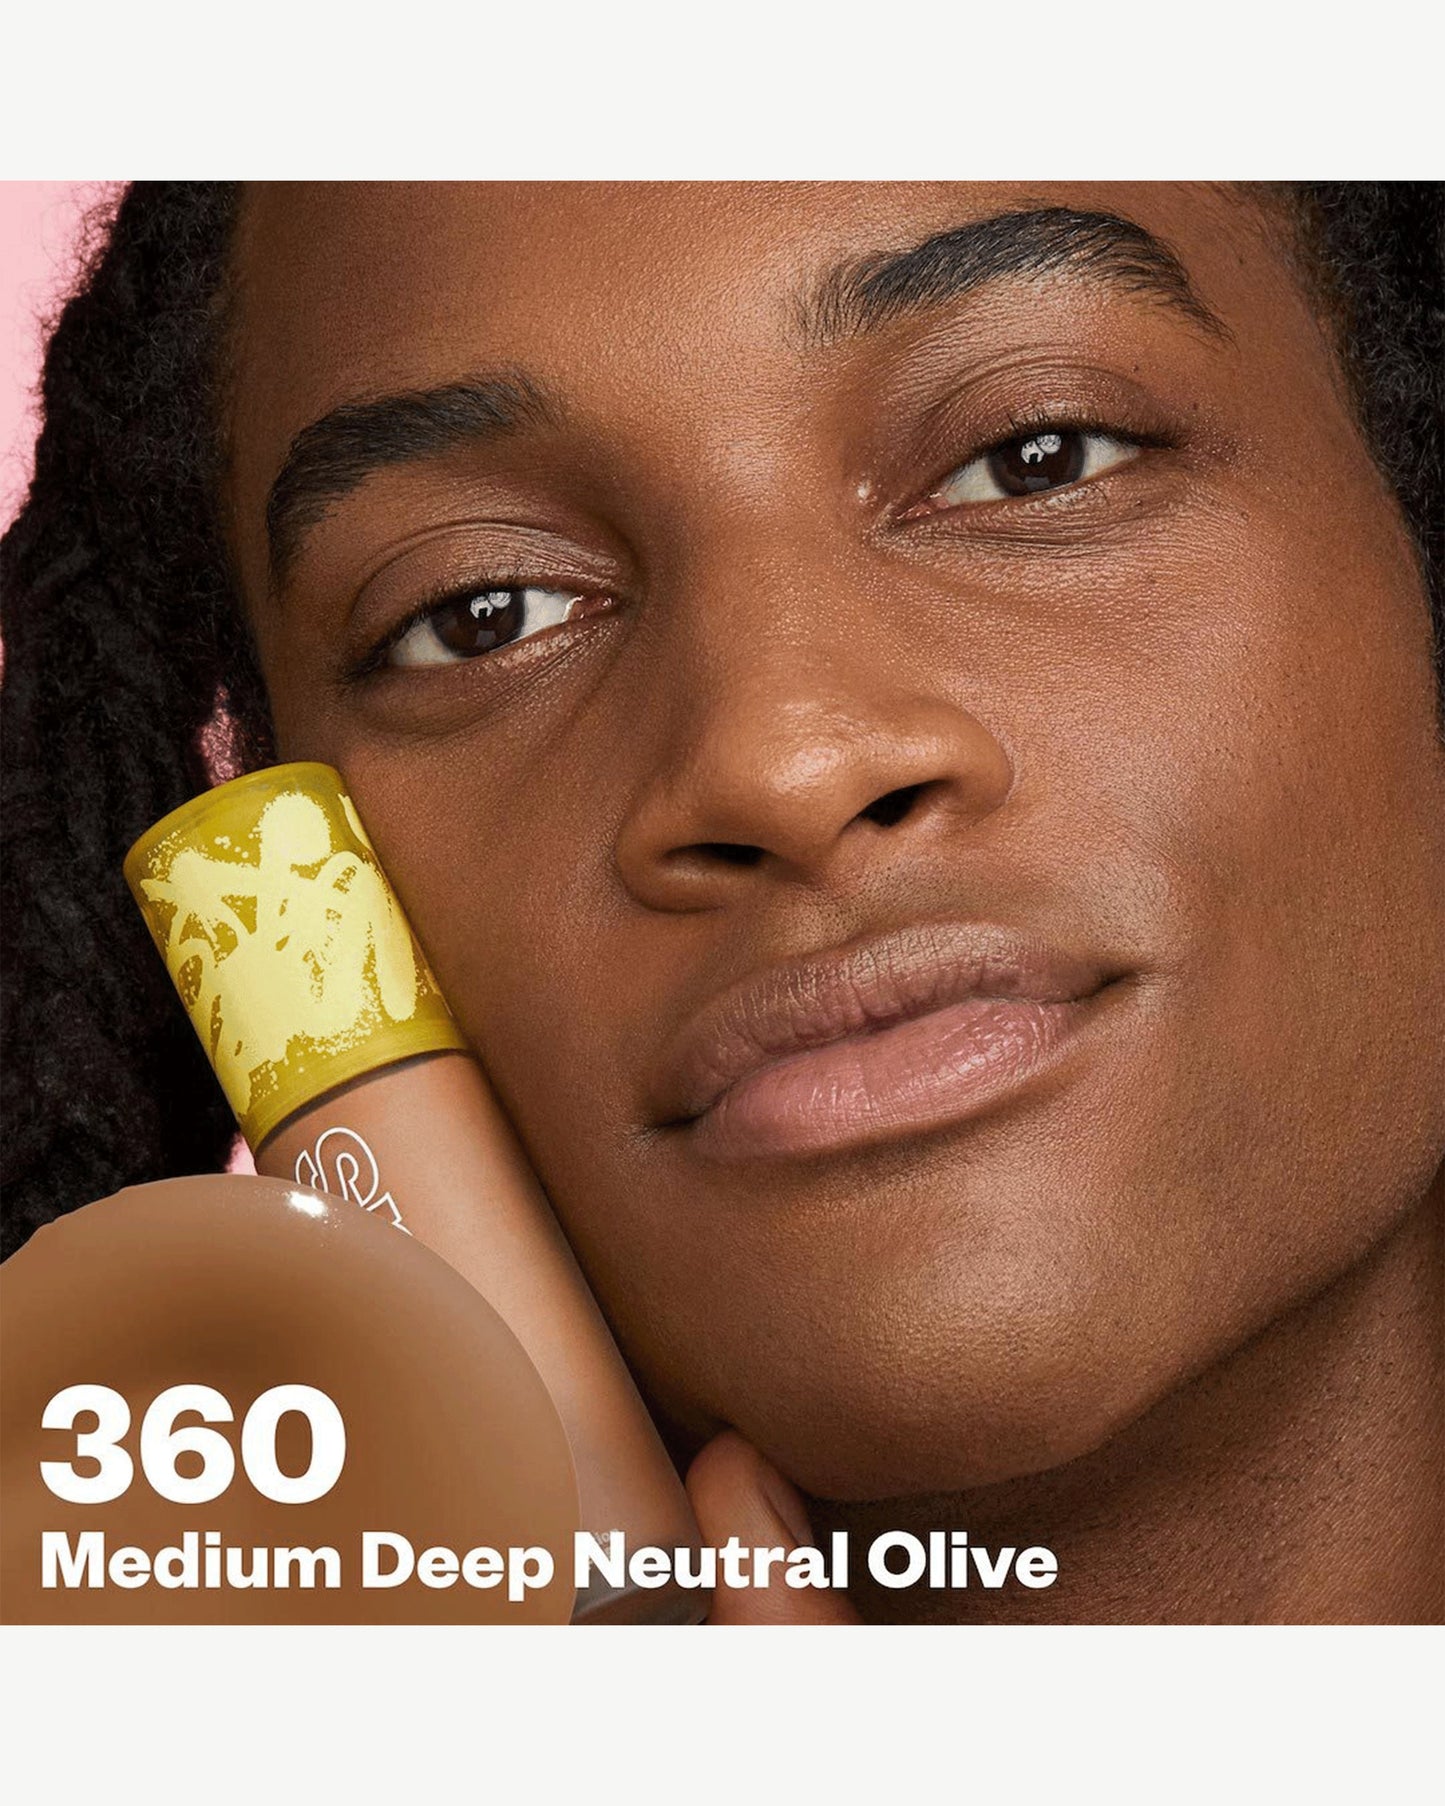 Medium Deep Neutral Olive 360 (medium deep with neutral olive undertones)